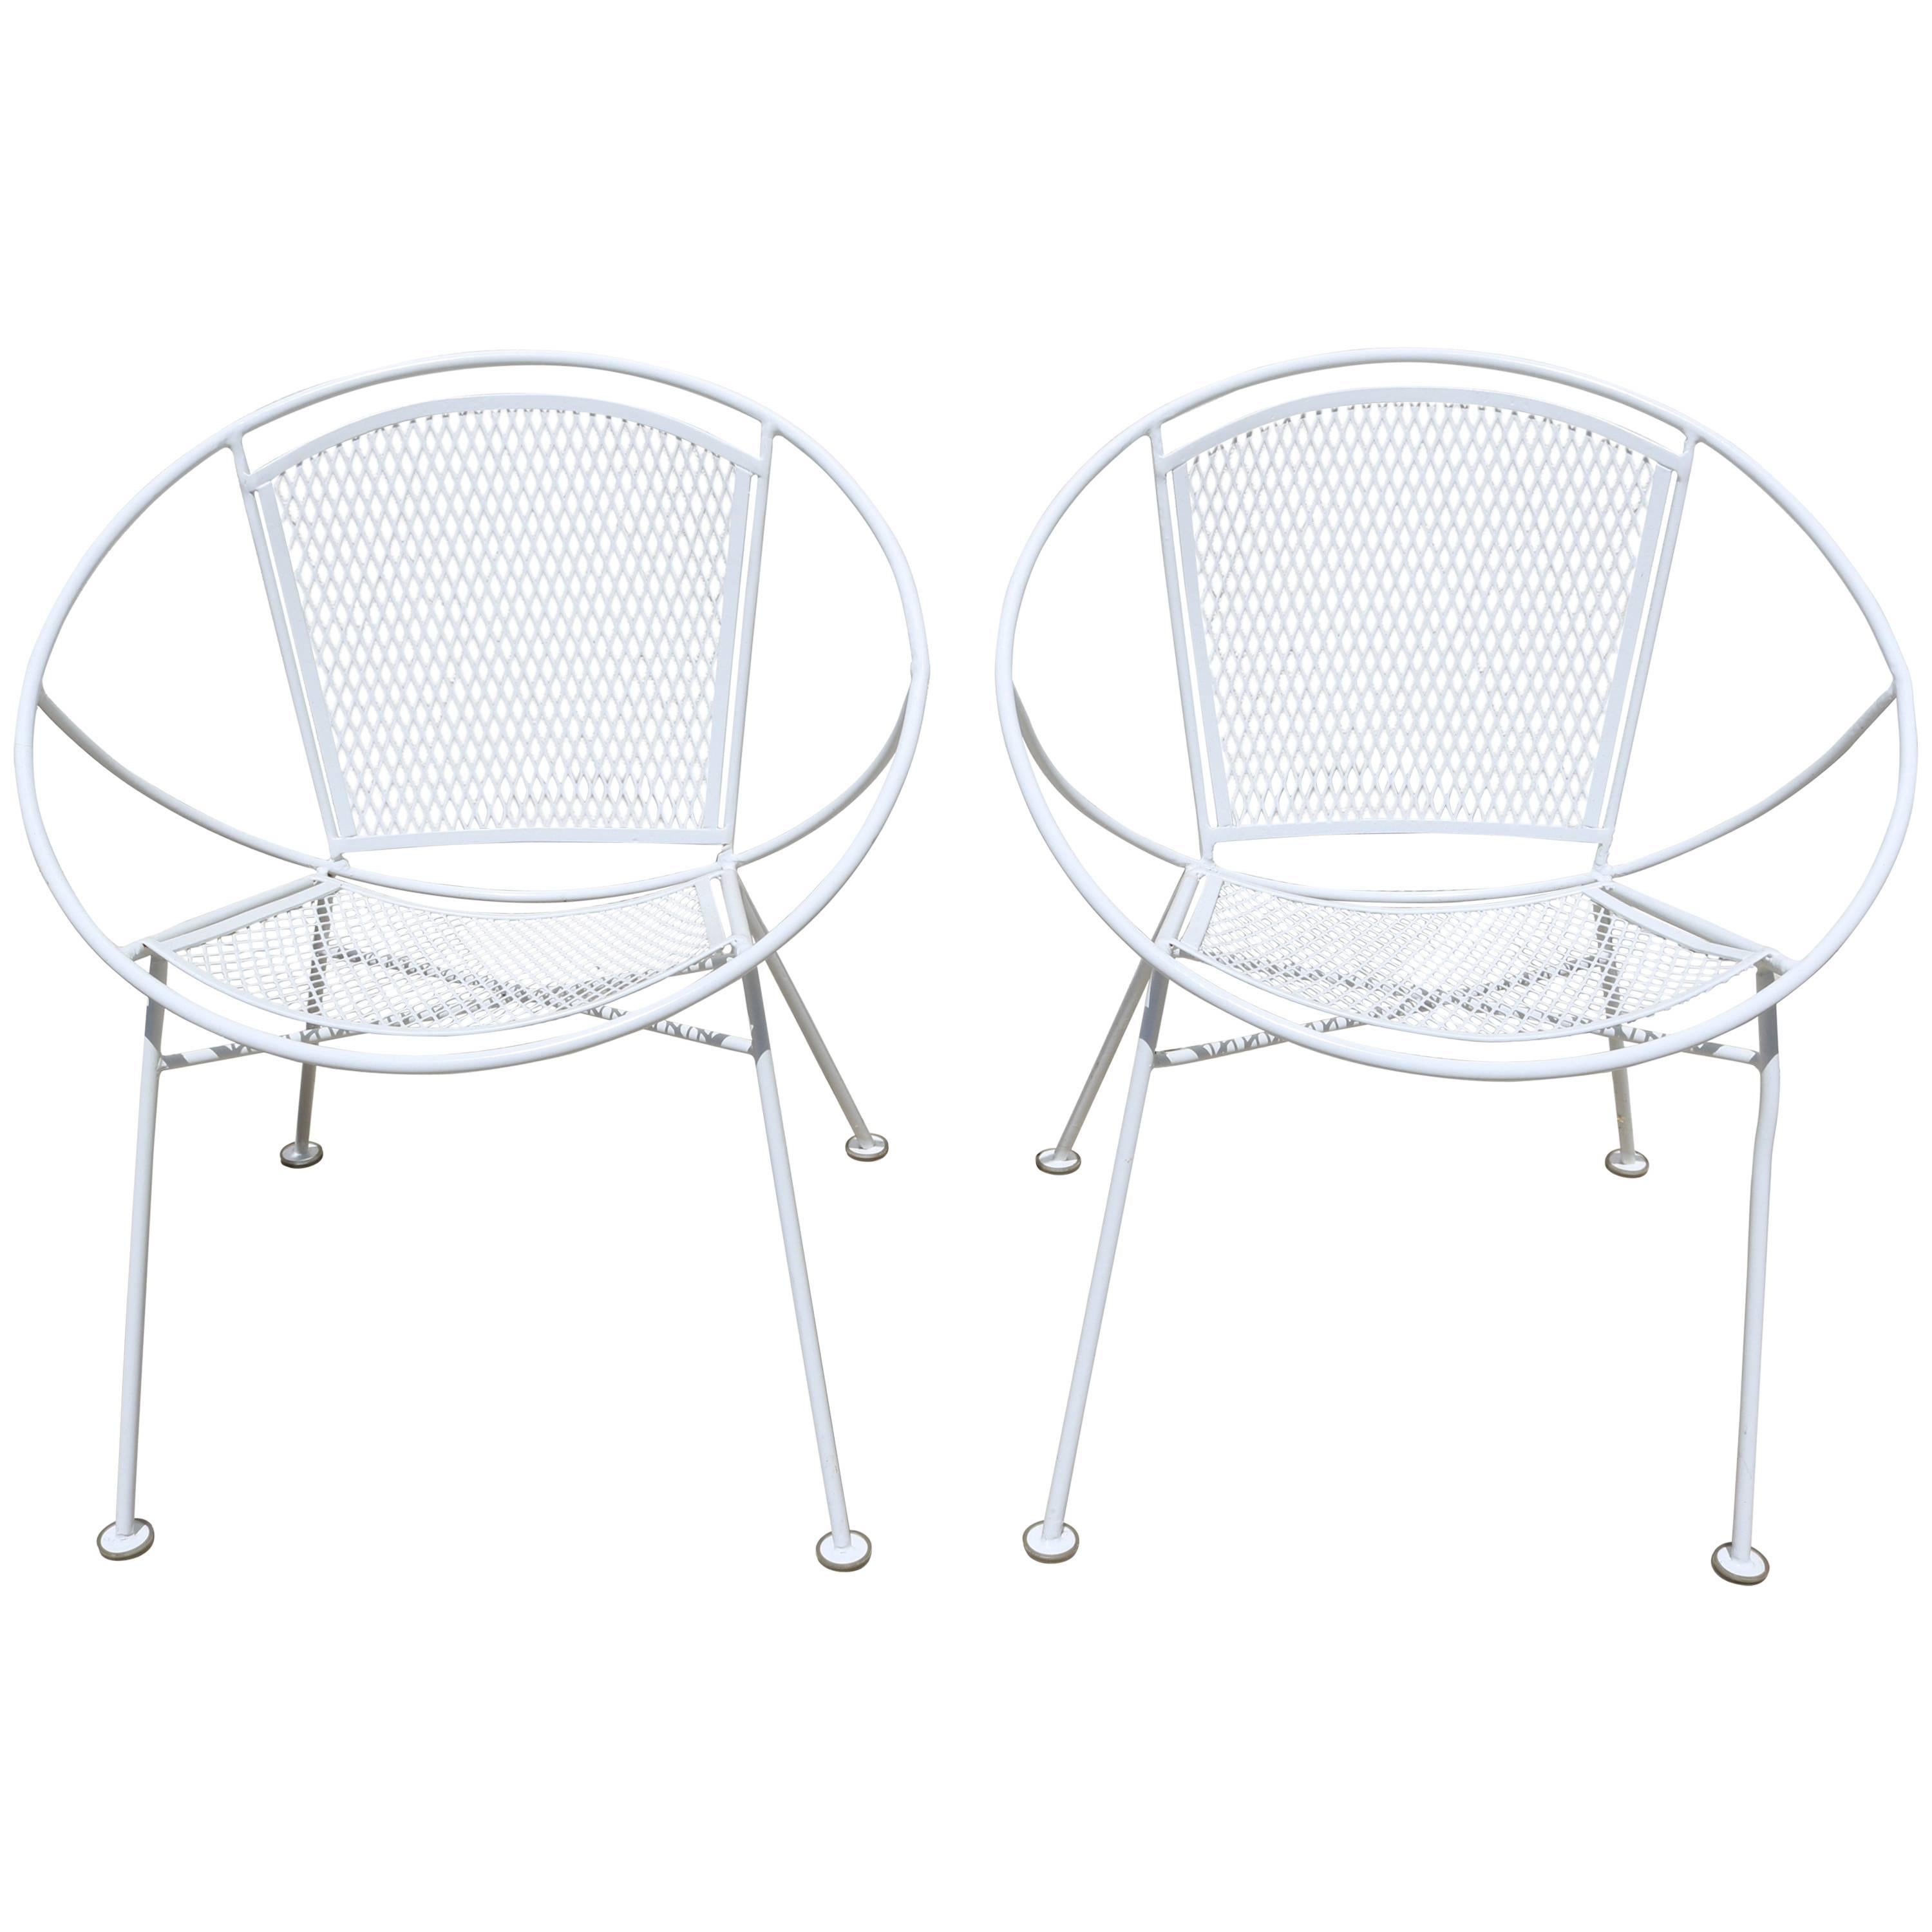 Pair of Salterini "Radar Hoop" Chairs in White by Maurizio Tempastini